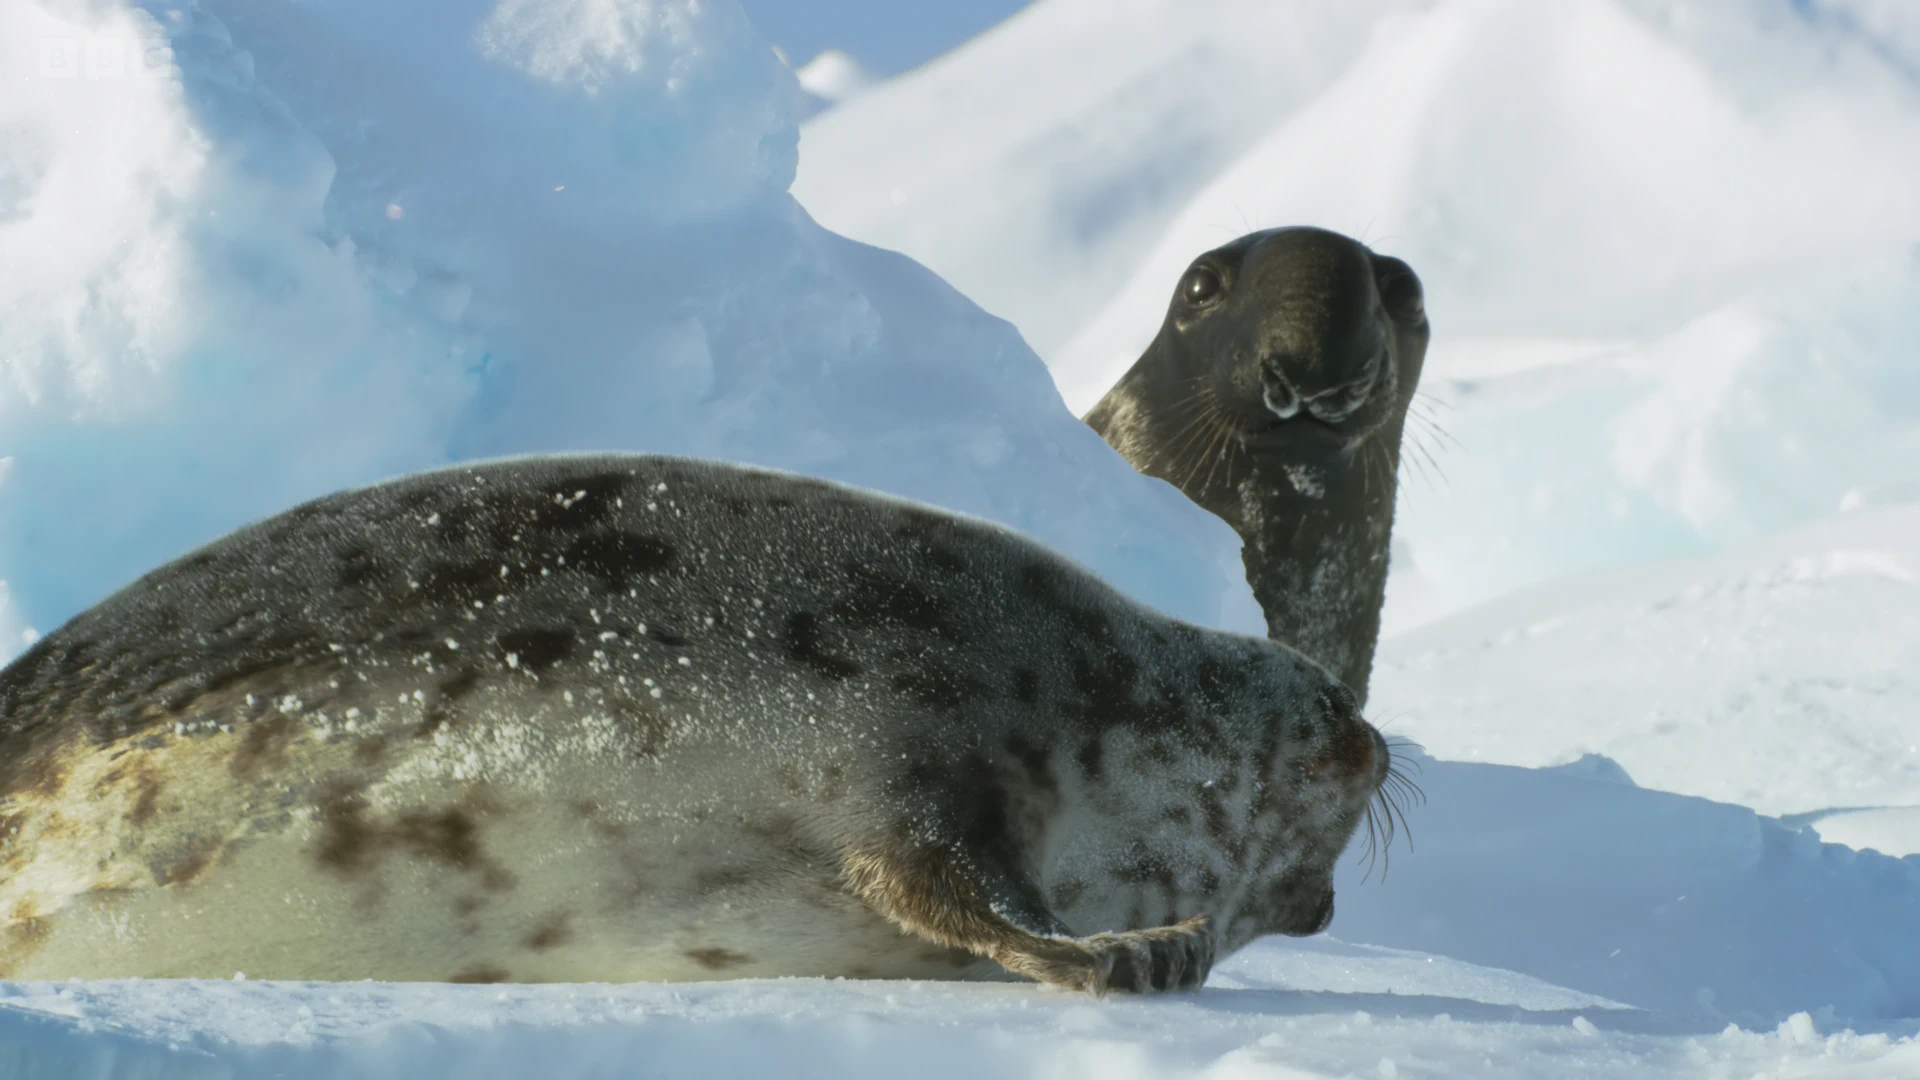 Hooded seal (Cystophora cristata) as shown in Frozen Planet II - Frozen Worlds